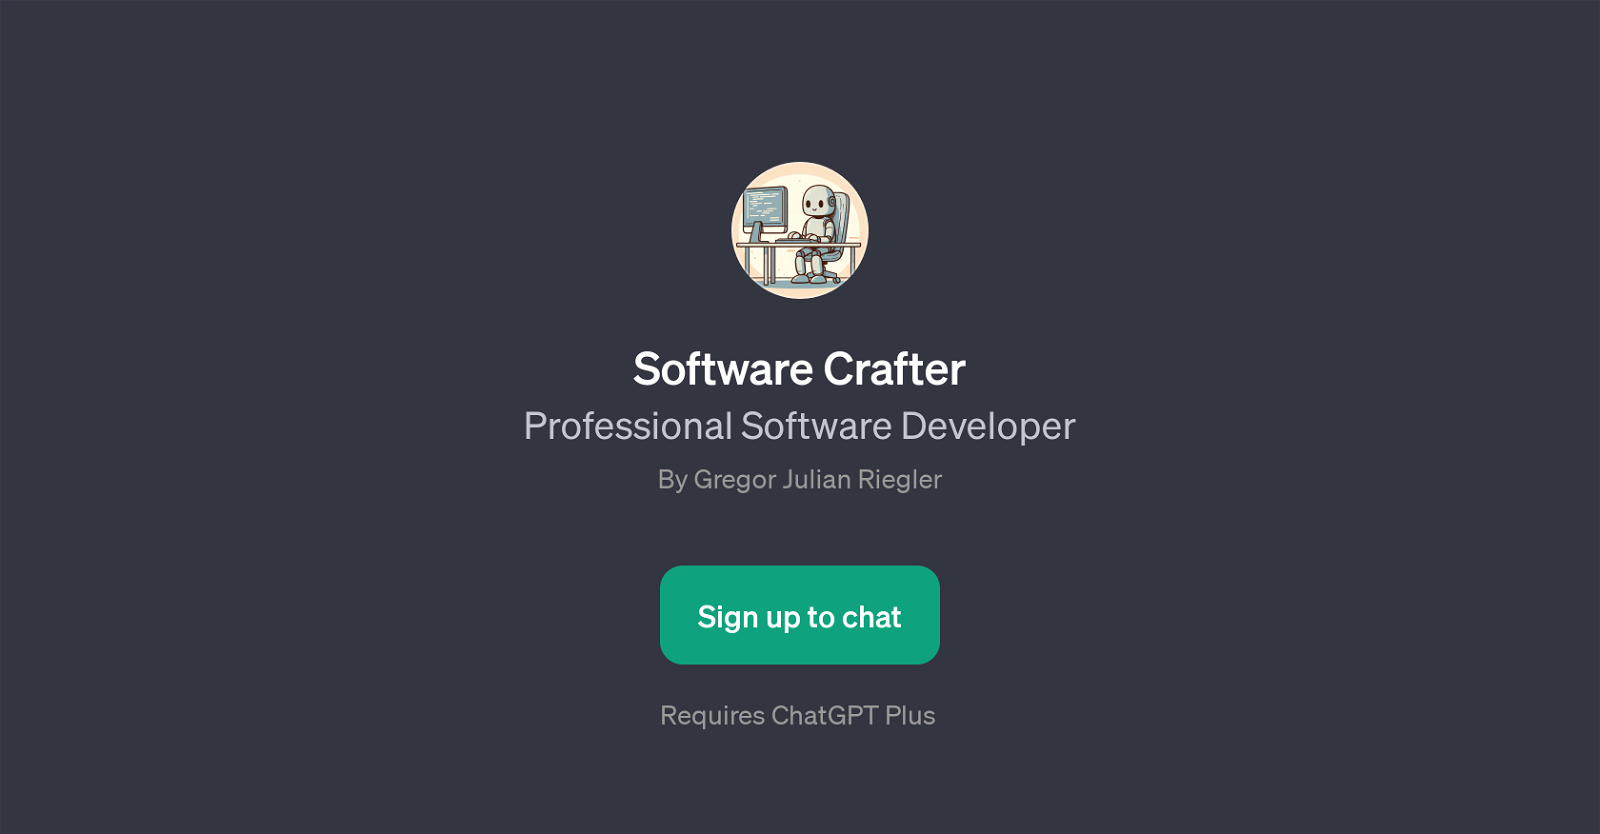 Software Crafter website